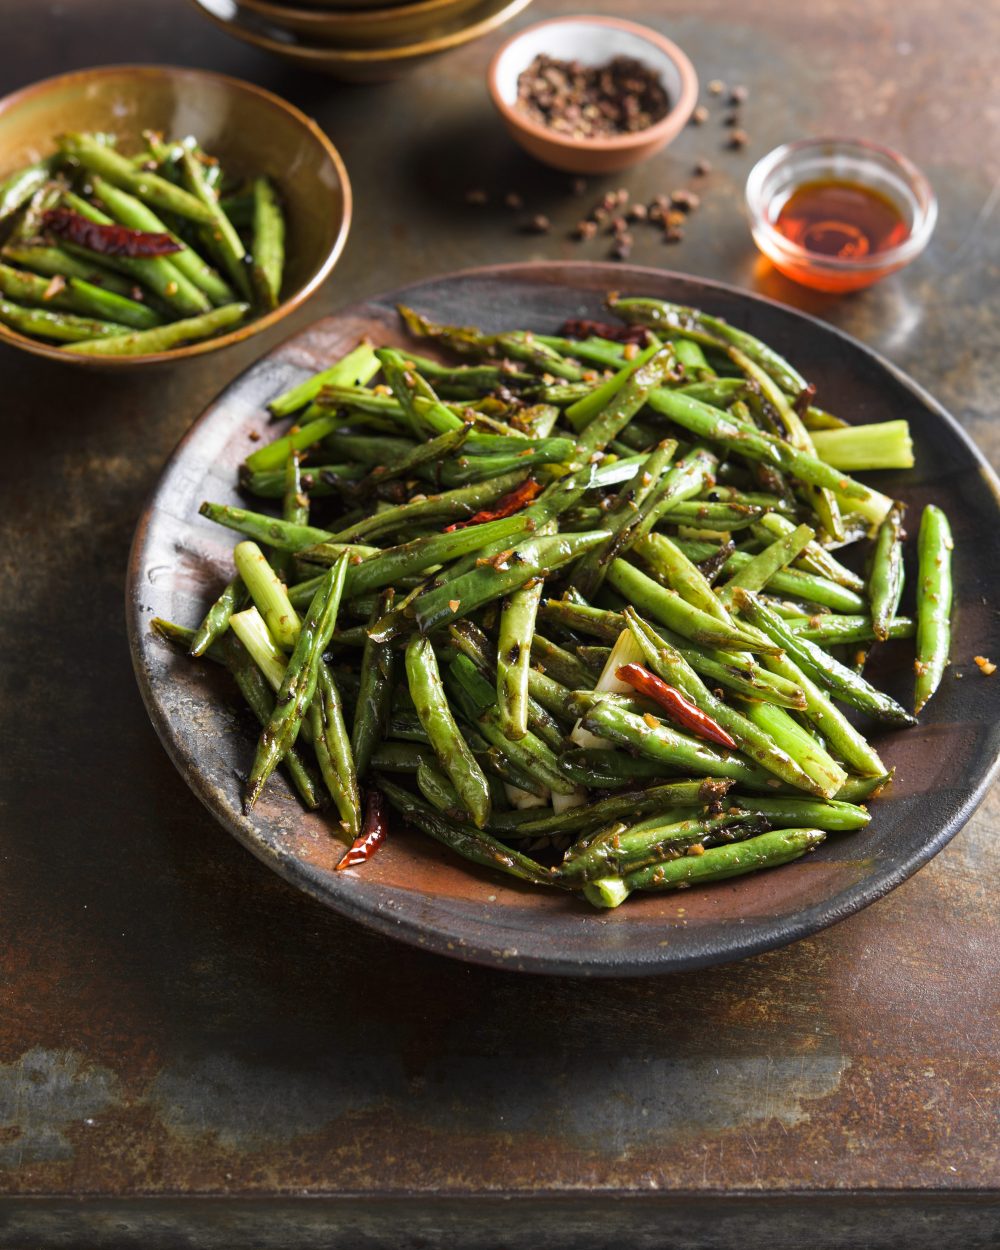 Dry fried green beans sichuan peppercorns v